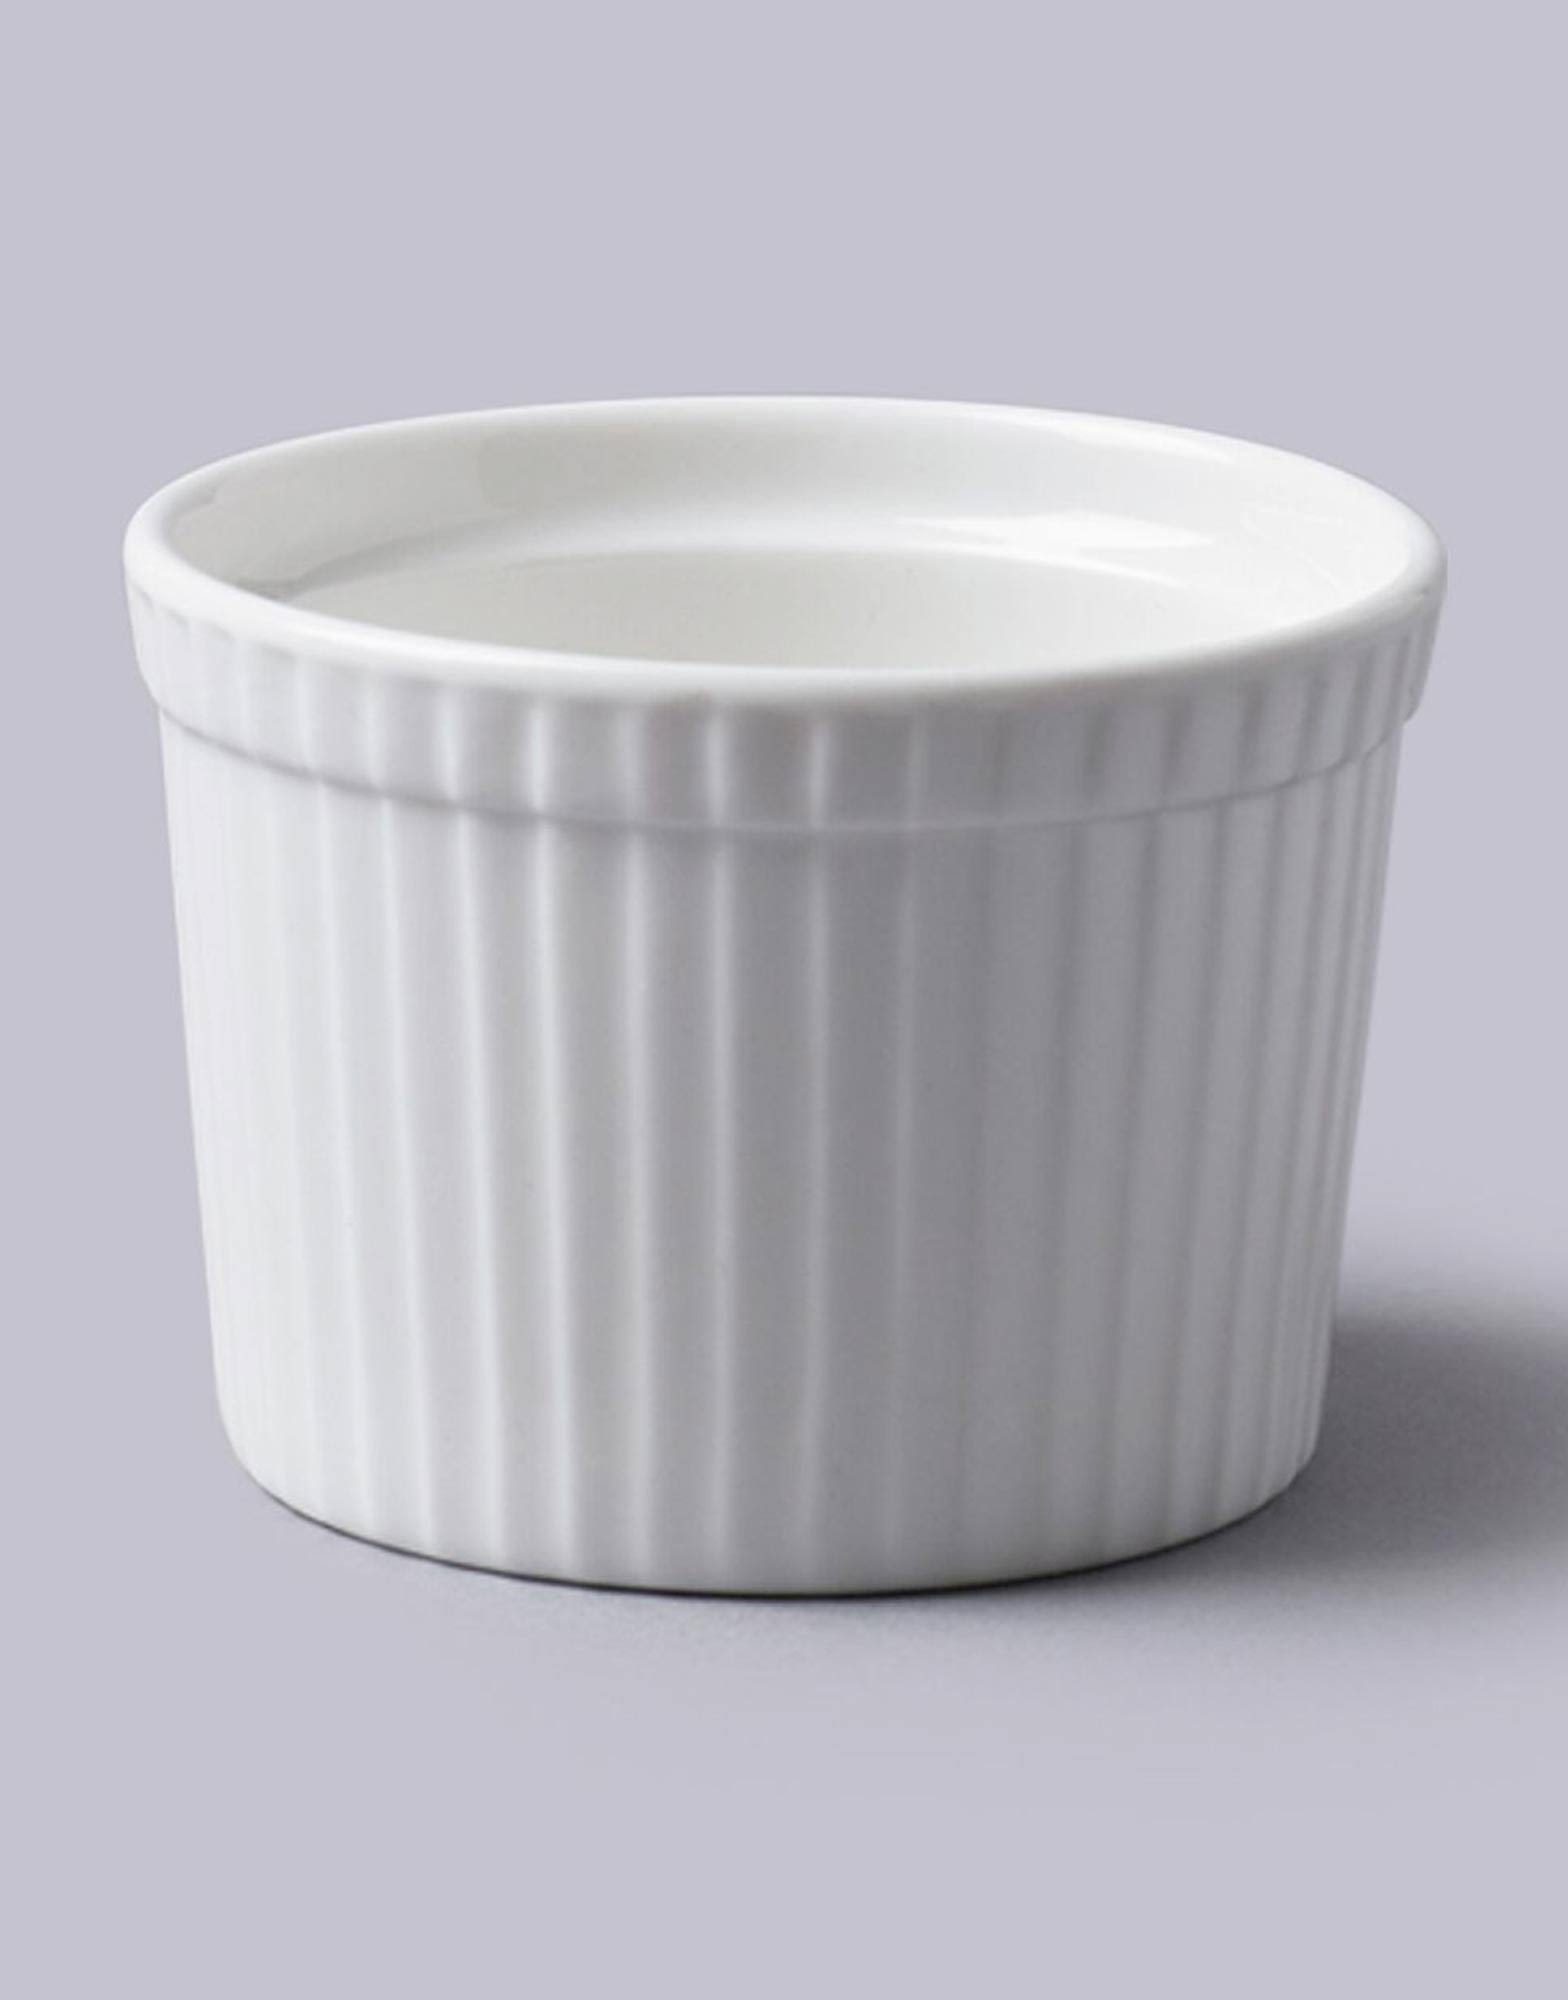 New Wm Bartleet White Porcelain Mini Pestle And Mortar 7cm x 4cm ORIGINAL ITEM 